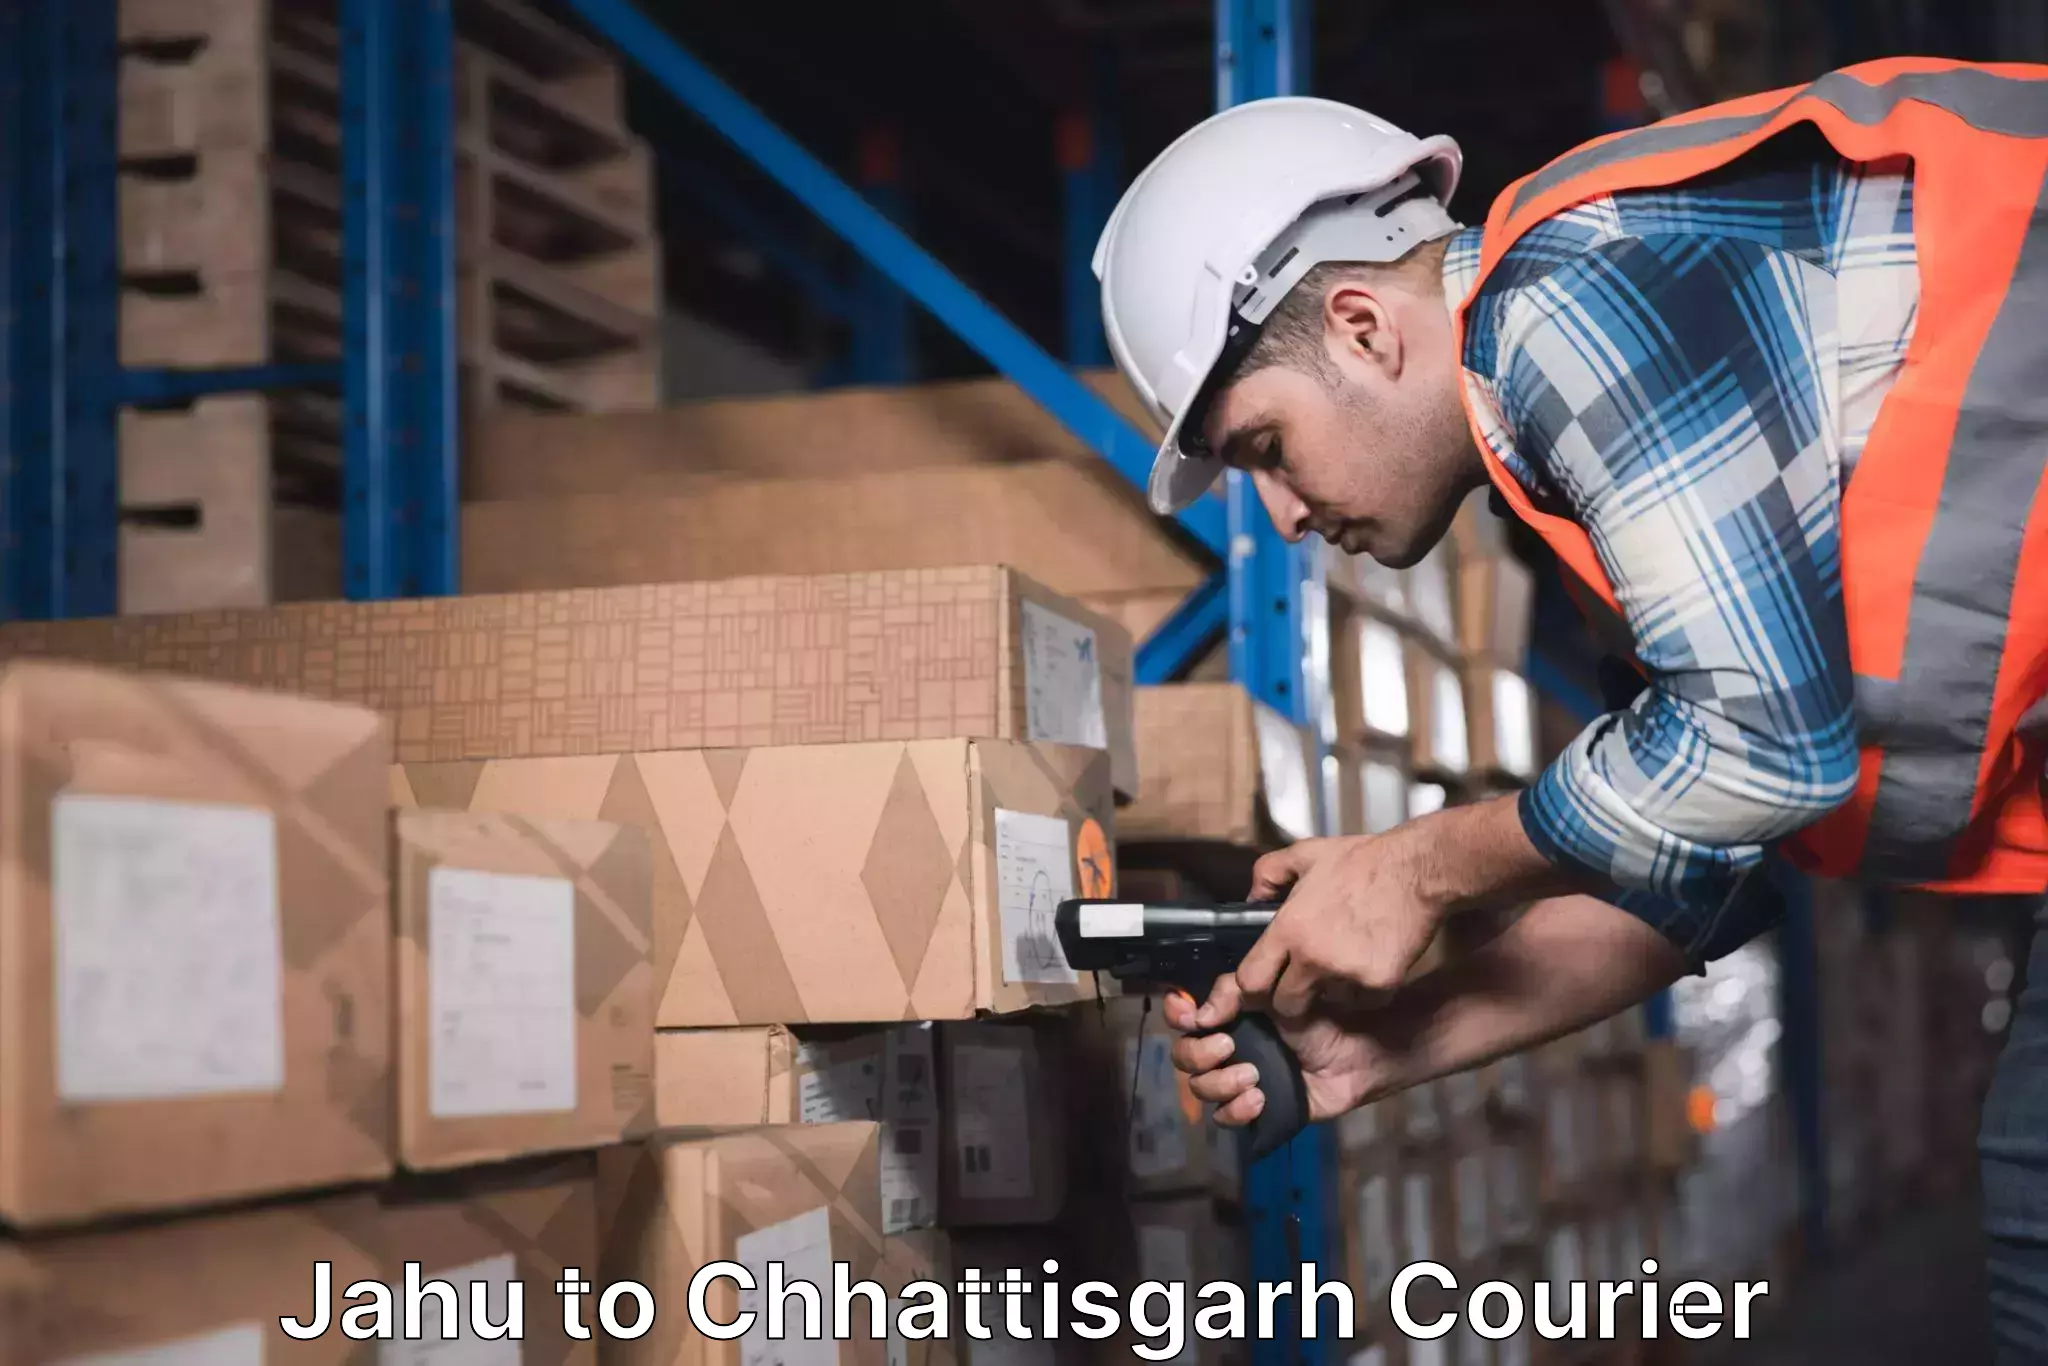 Global logistics network Jahu to Chhattisgarh